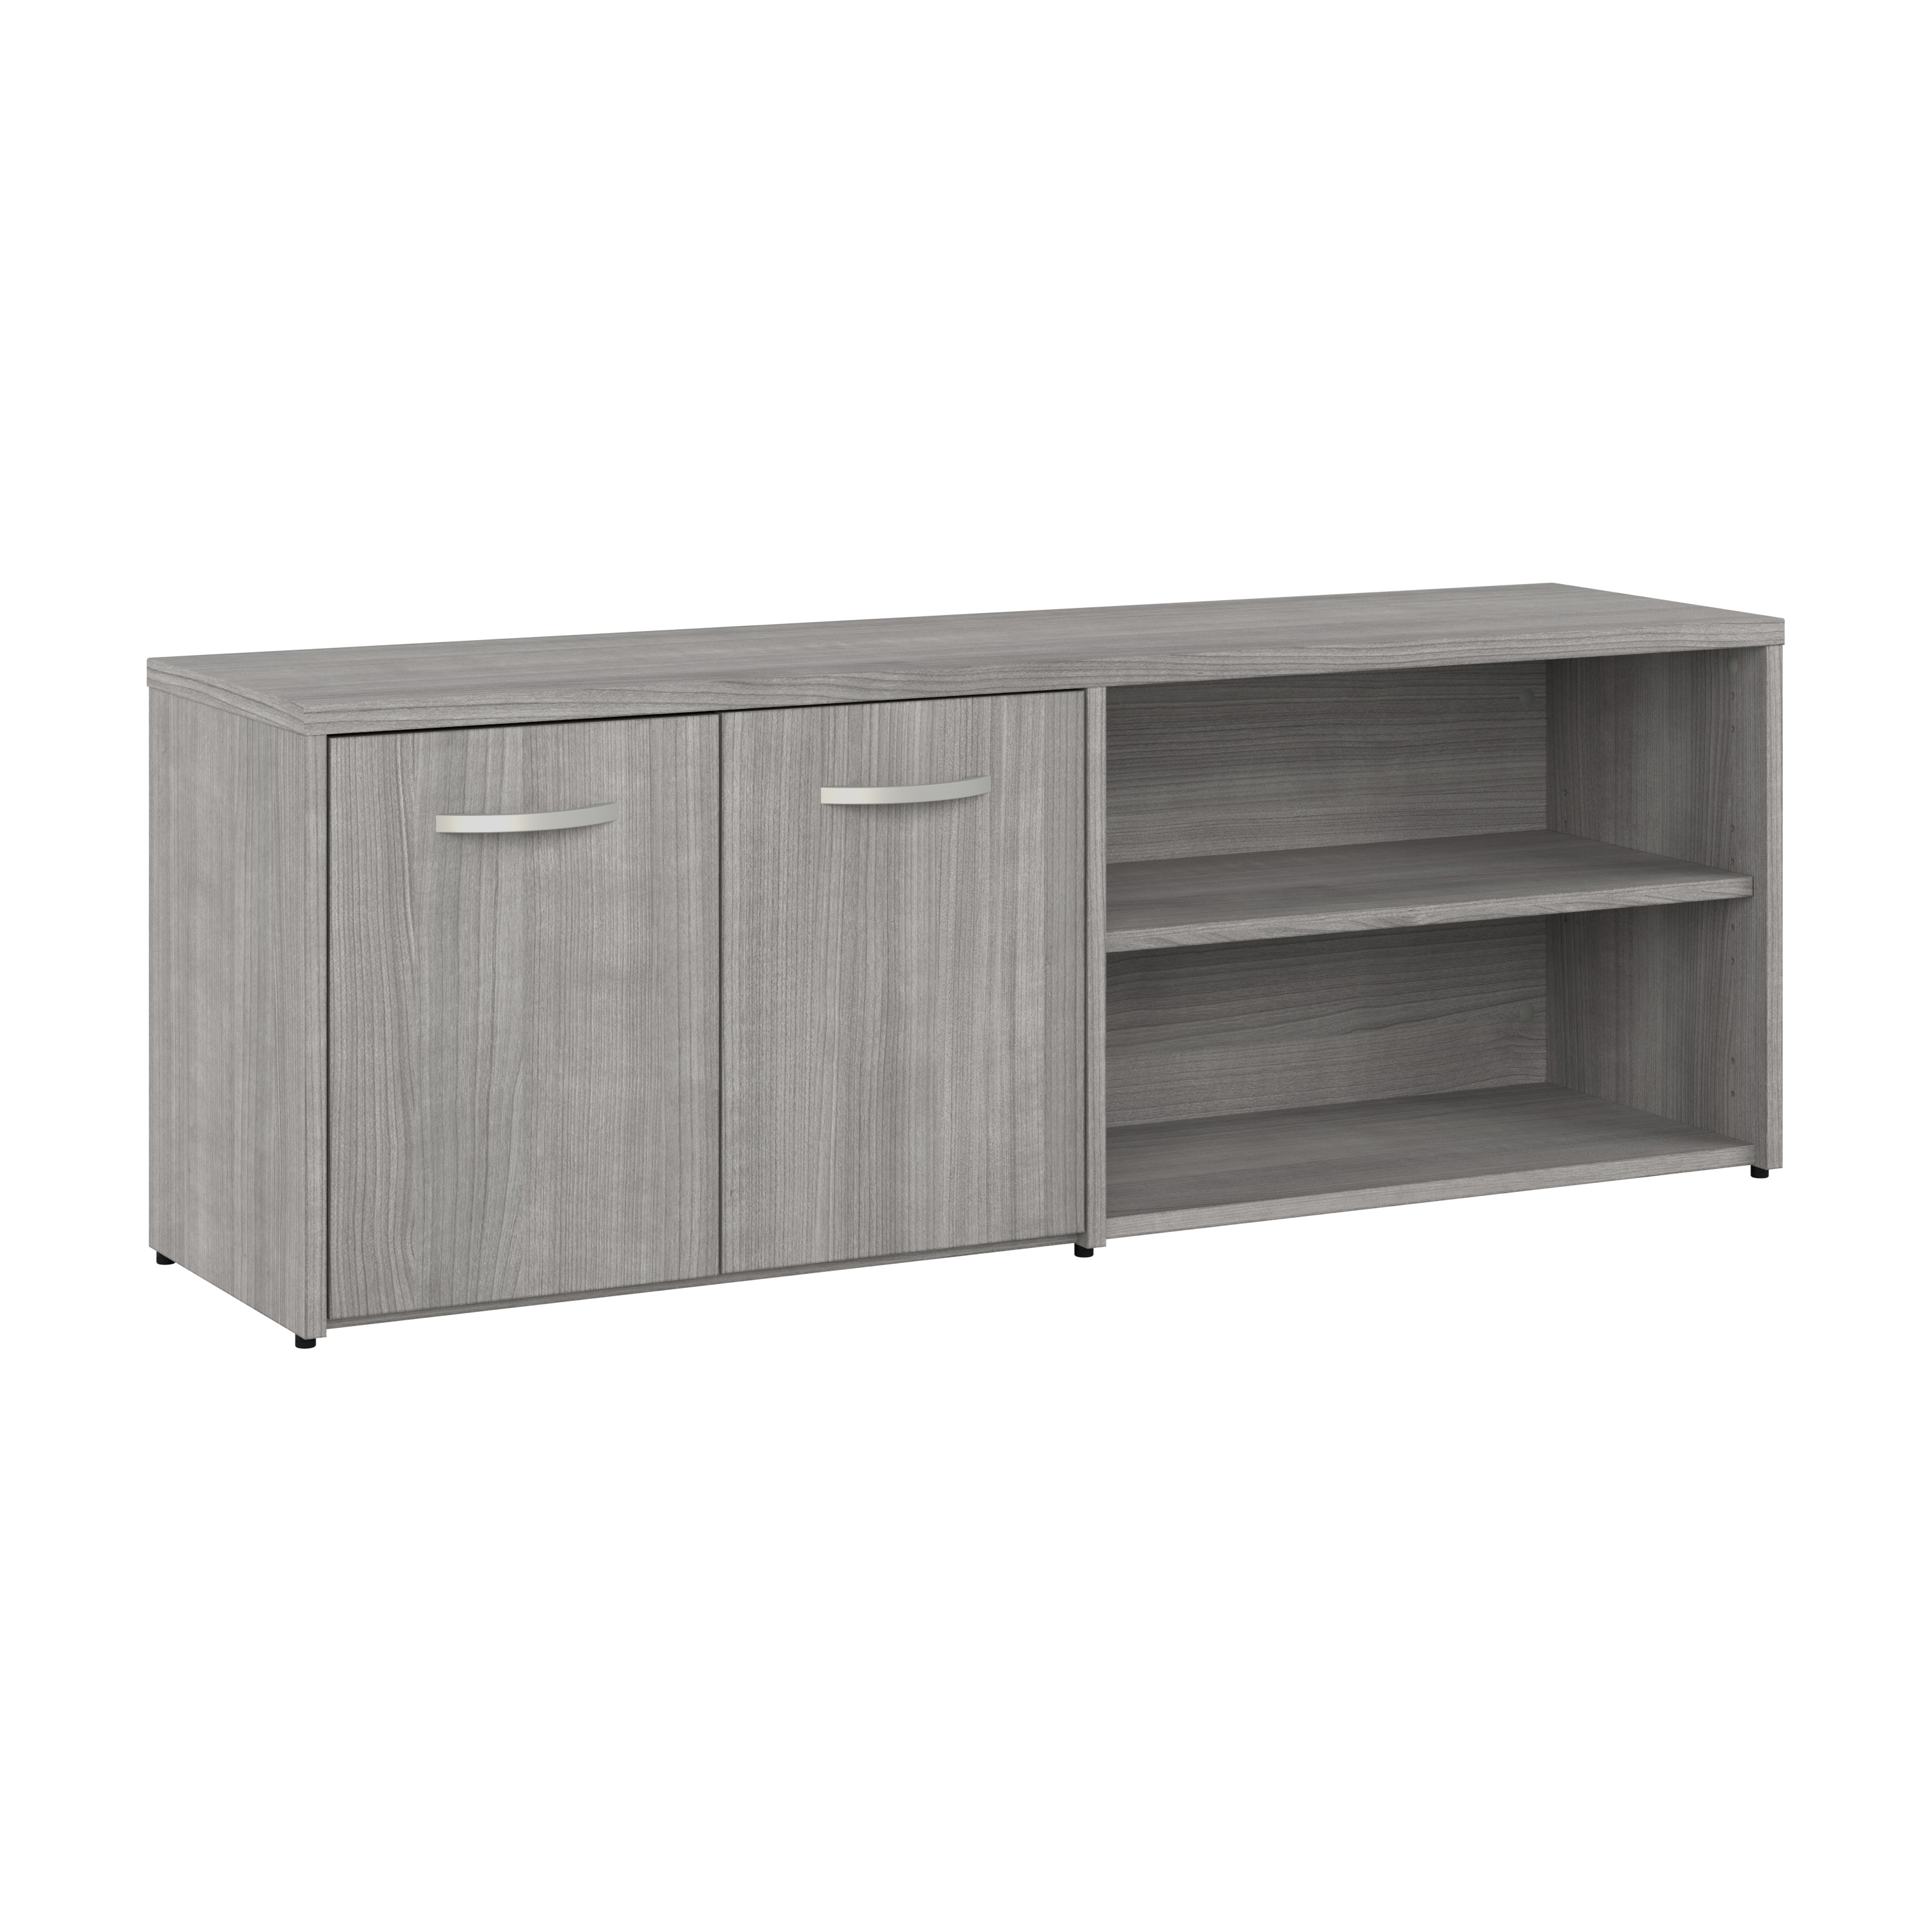 Shop Bush Business Furniture Studio C Low Storage Cabinet with Doors and Shelves 02 SCS160PG #color_platinum gray